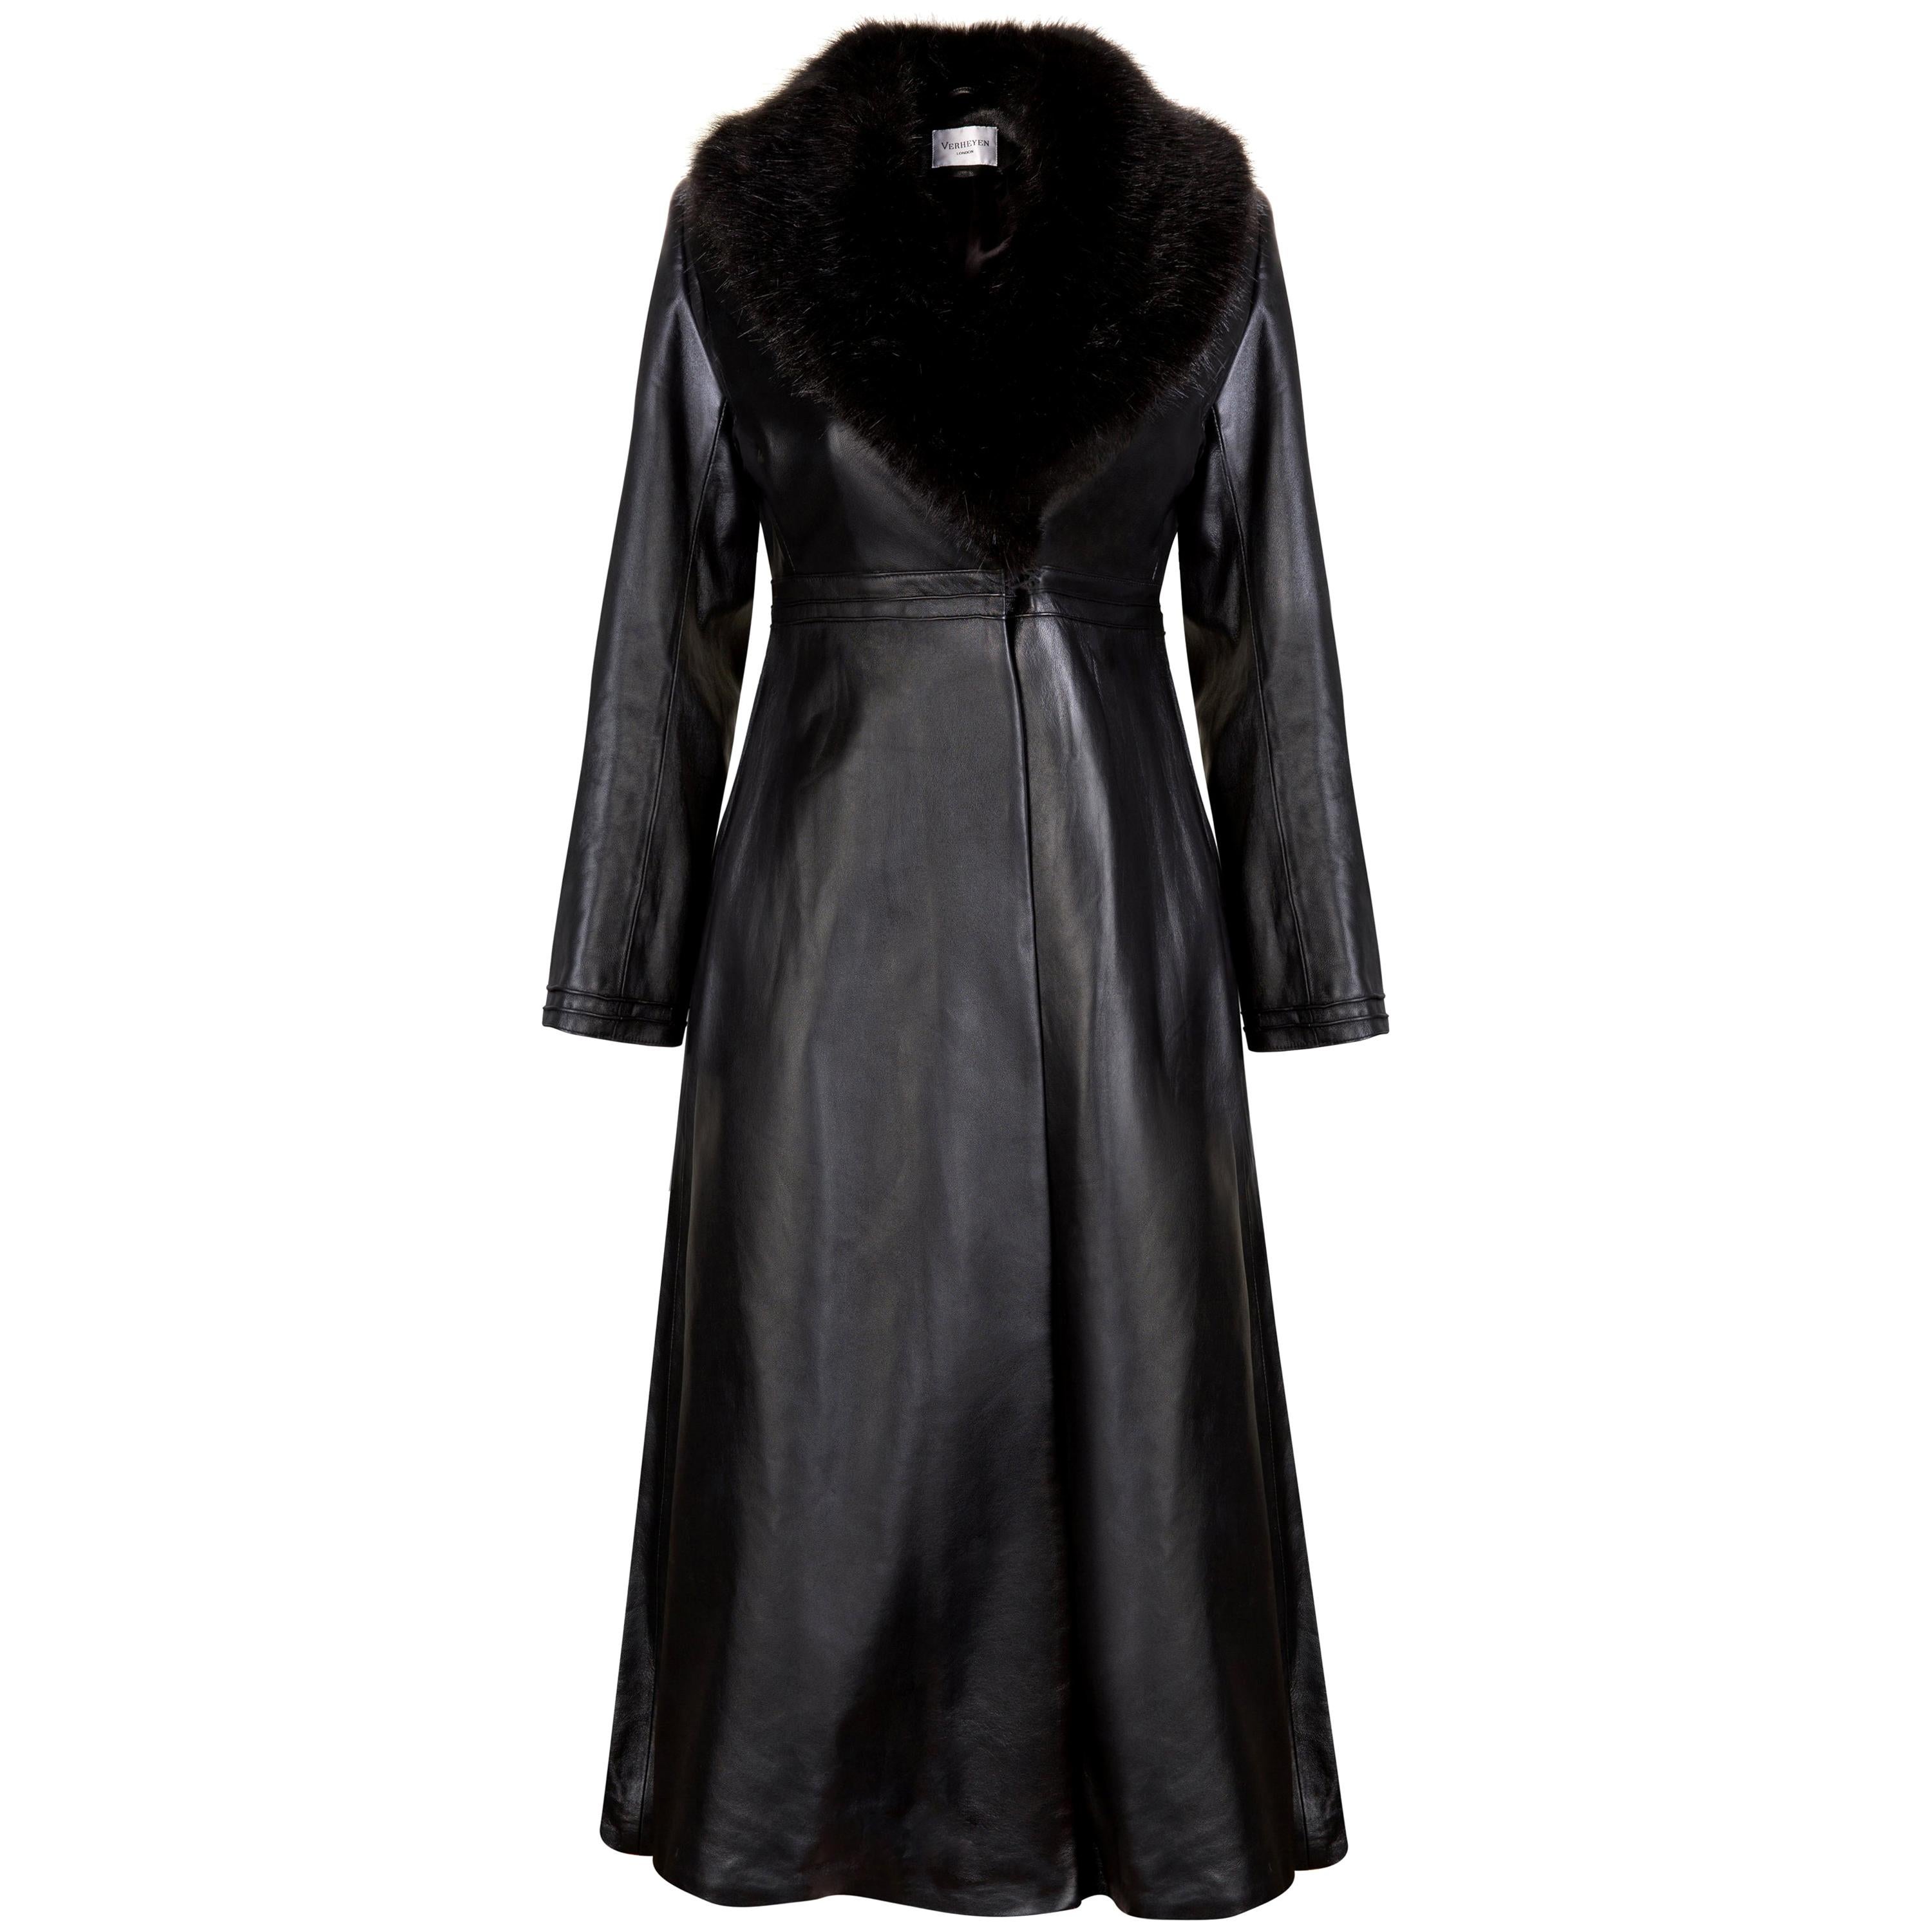 Verheyen London Edward Leather Coat with Faux Fur Collar in Black - Size uk 10 For Sale